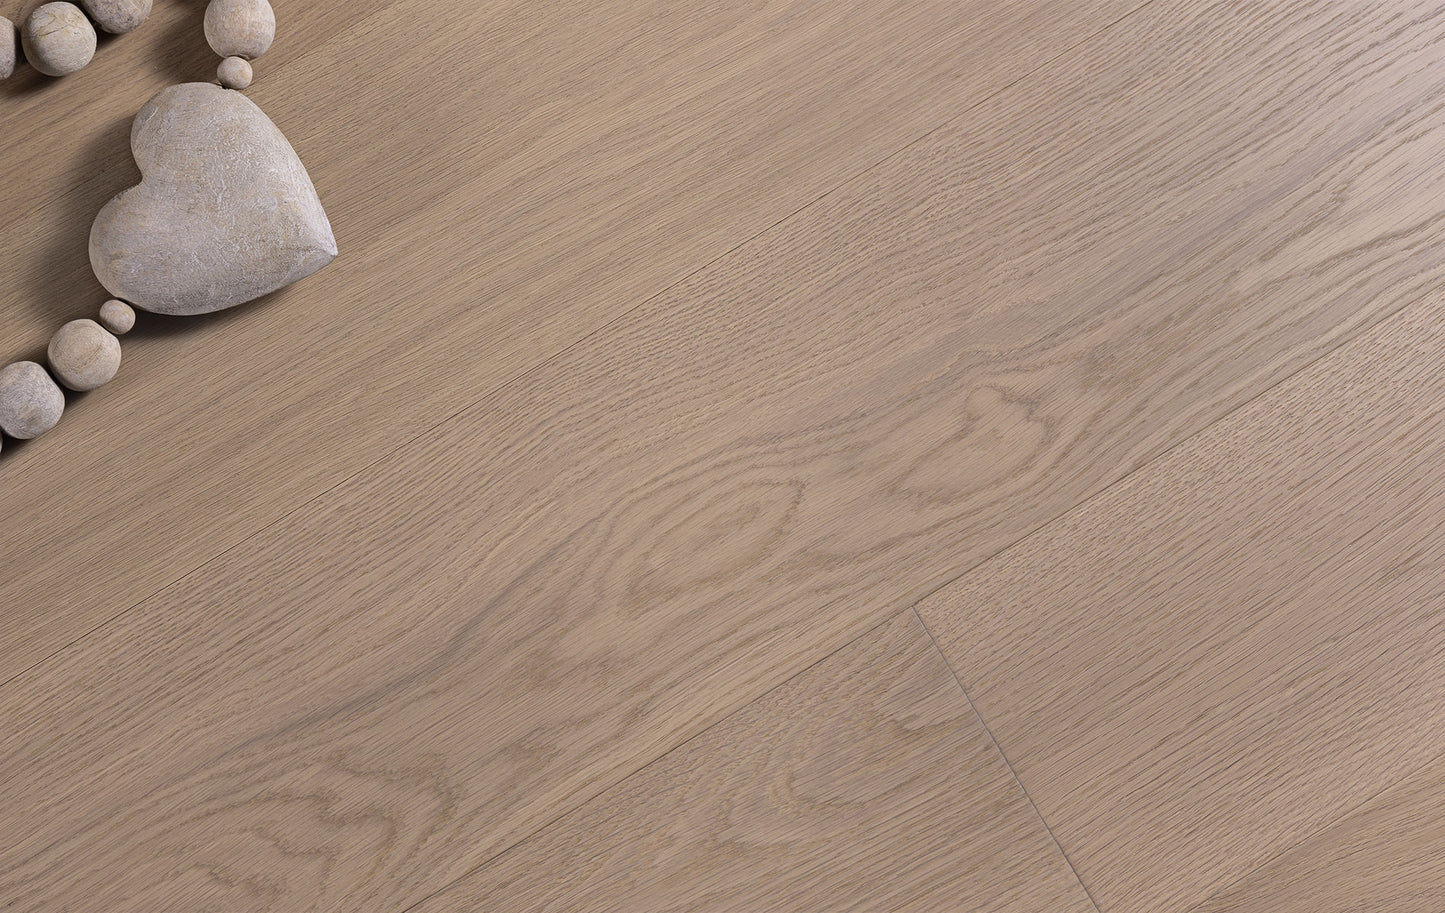 White oak wood flooring - 8'' wide plank - platinum grey/brown, traceable, eco-responsible, certified - Aberdeen